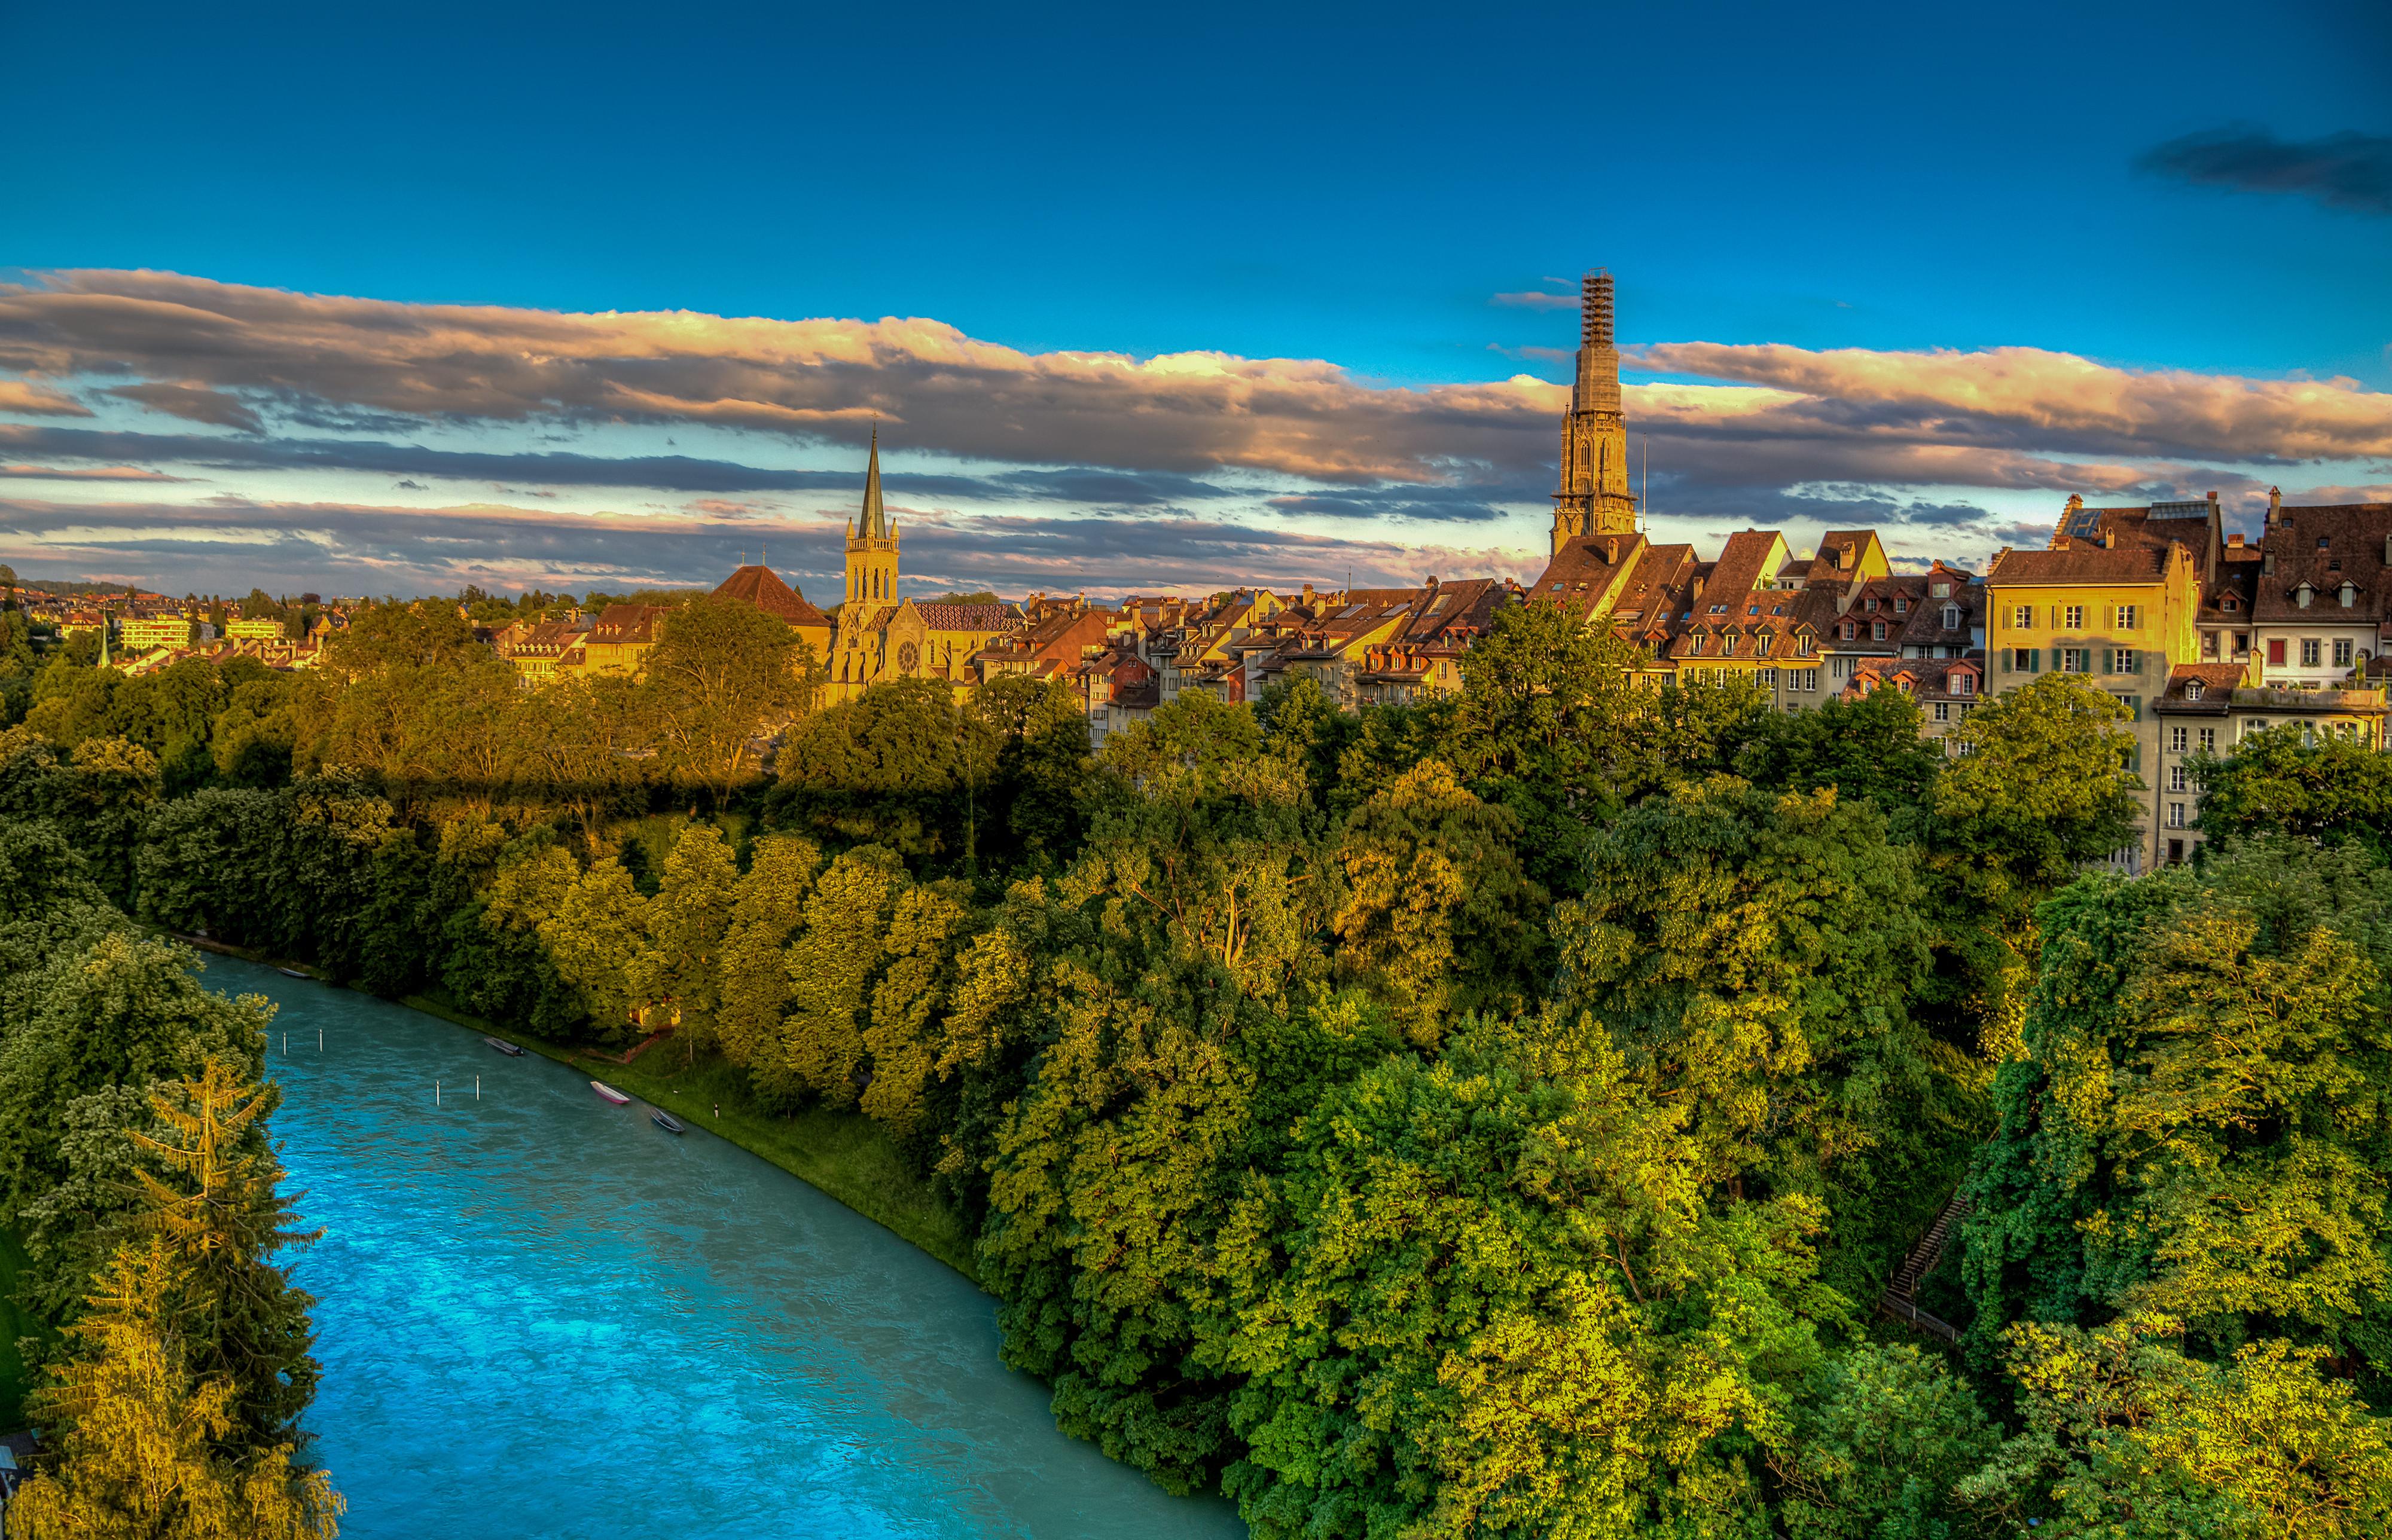 Bern, Switzerland 4k Ultra HD Wallpaper. Background Image